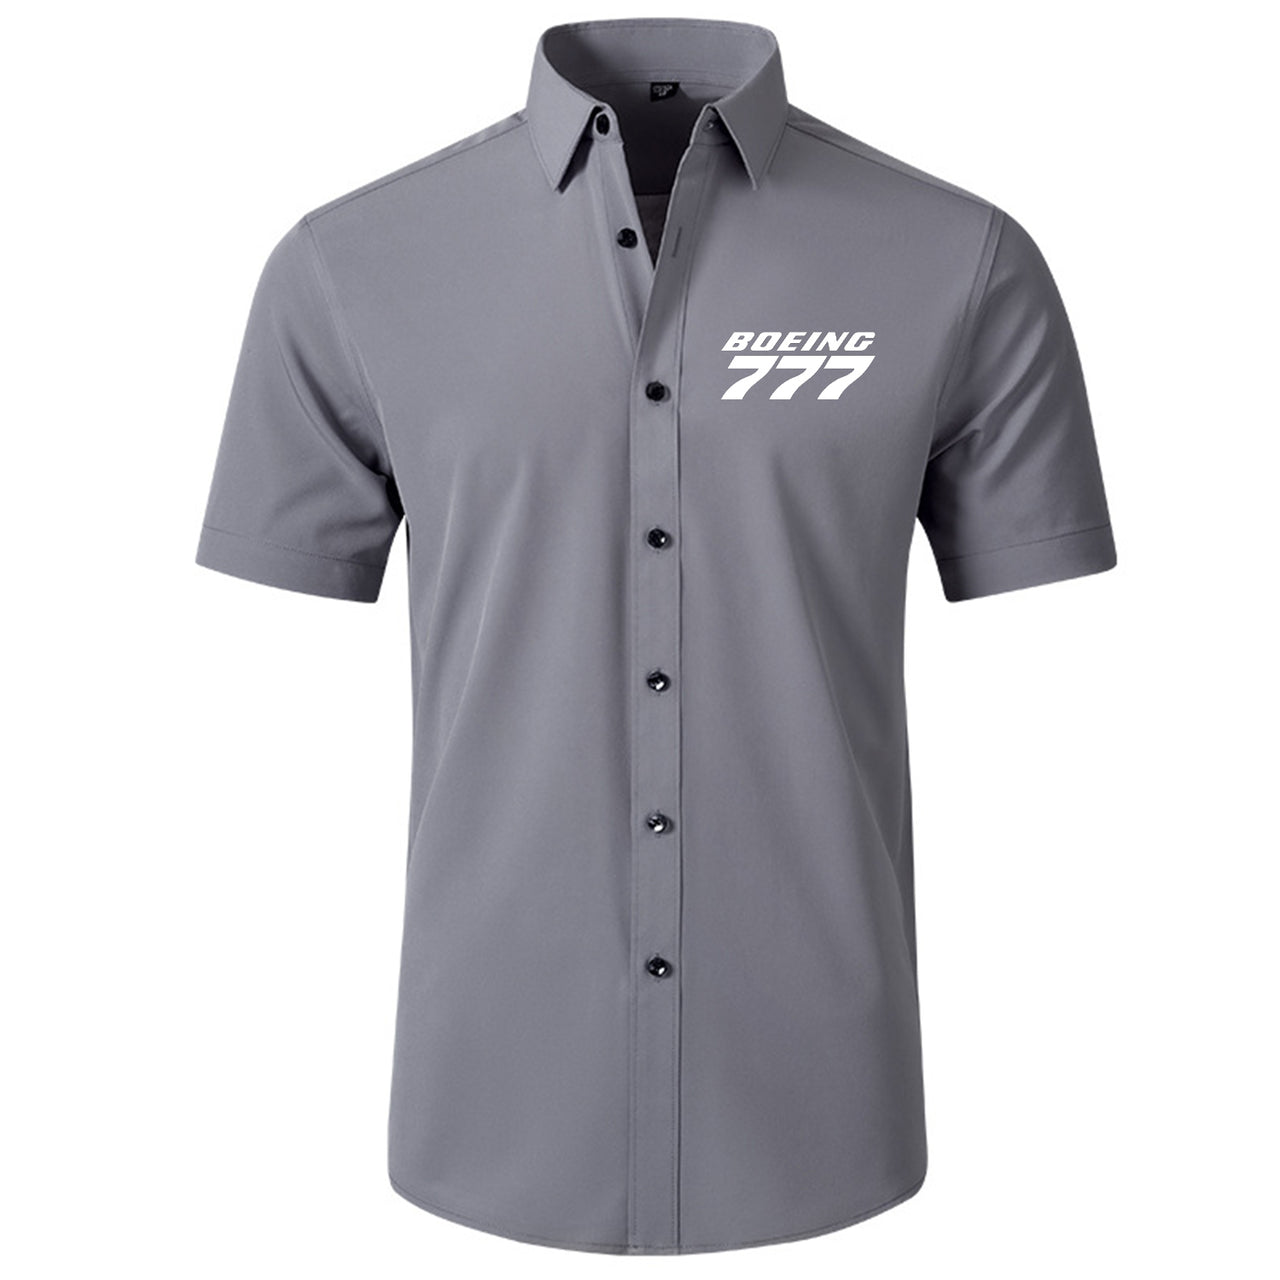 Boeing 777 & Text Designed Short Sleeve Shirts